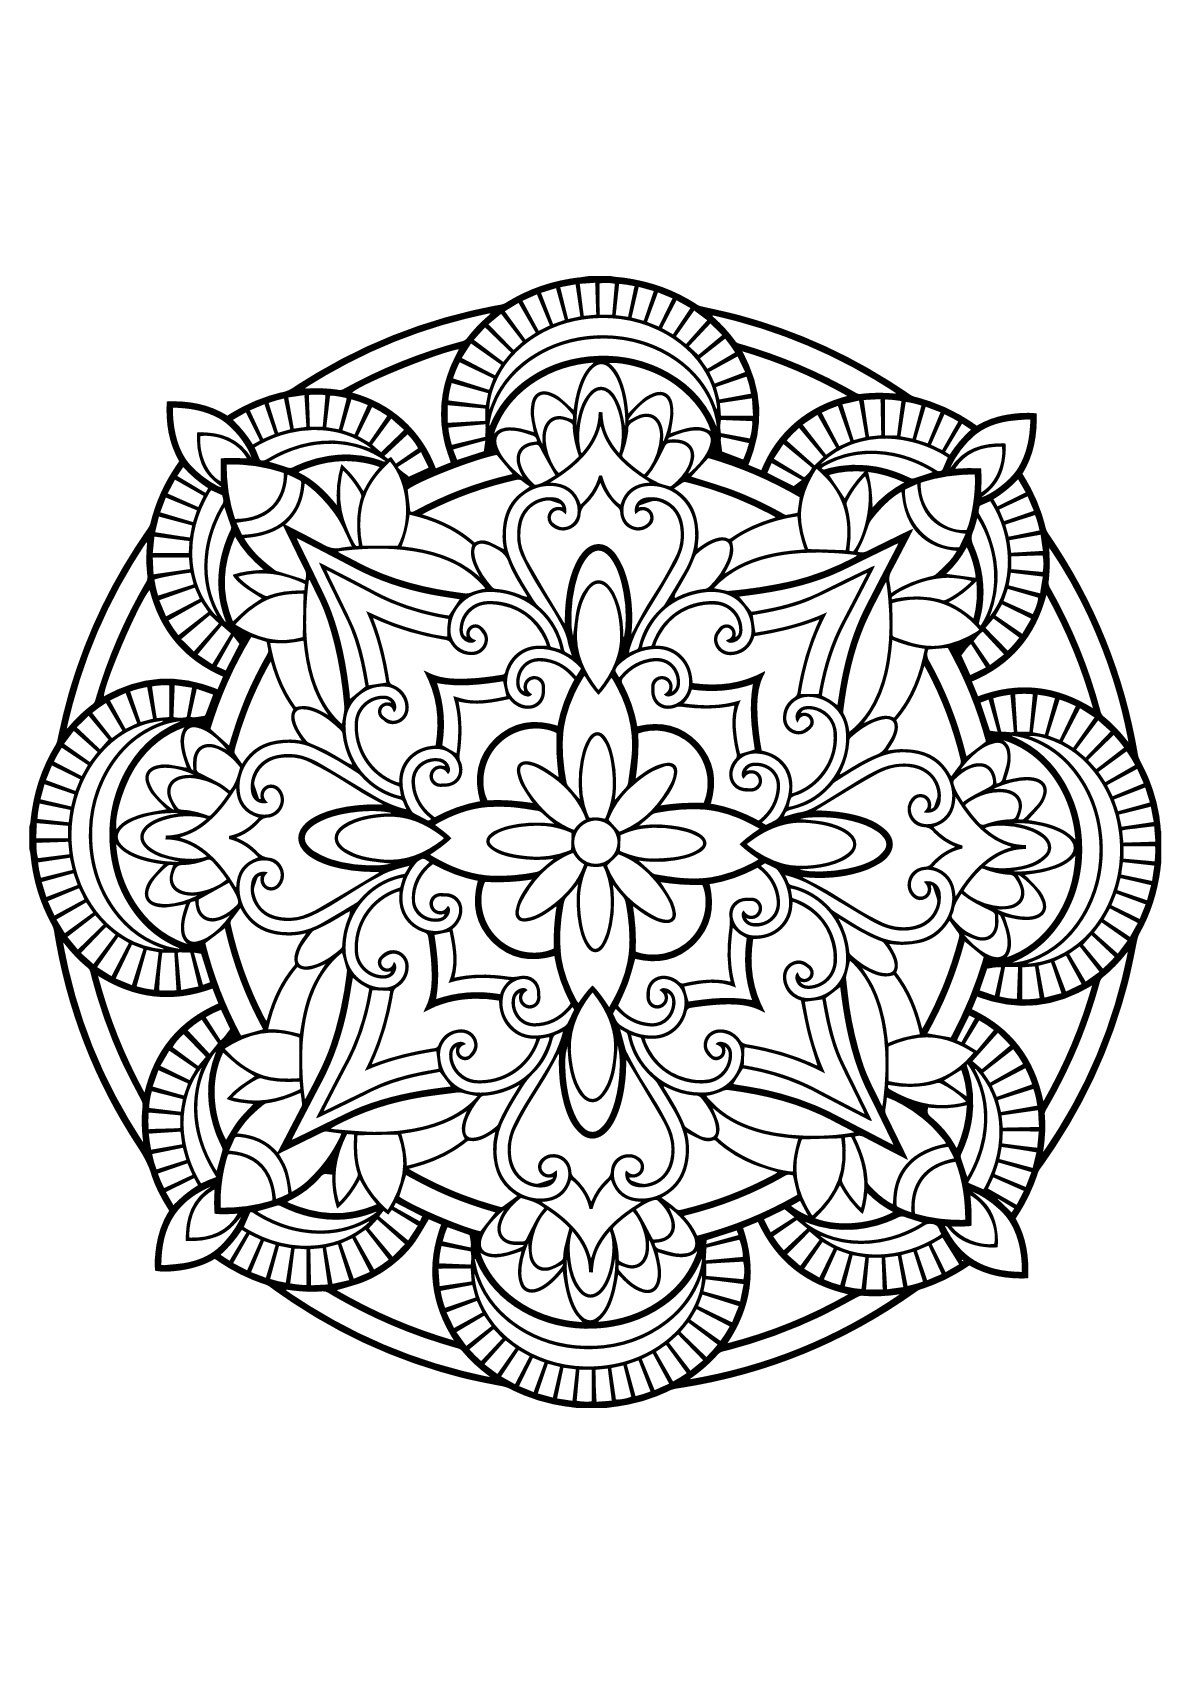 Mandala From Free Coloring Books For Adults 23 - M&amp;amp;alas Adult - Free Printable Mandalas